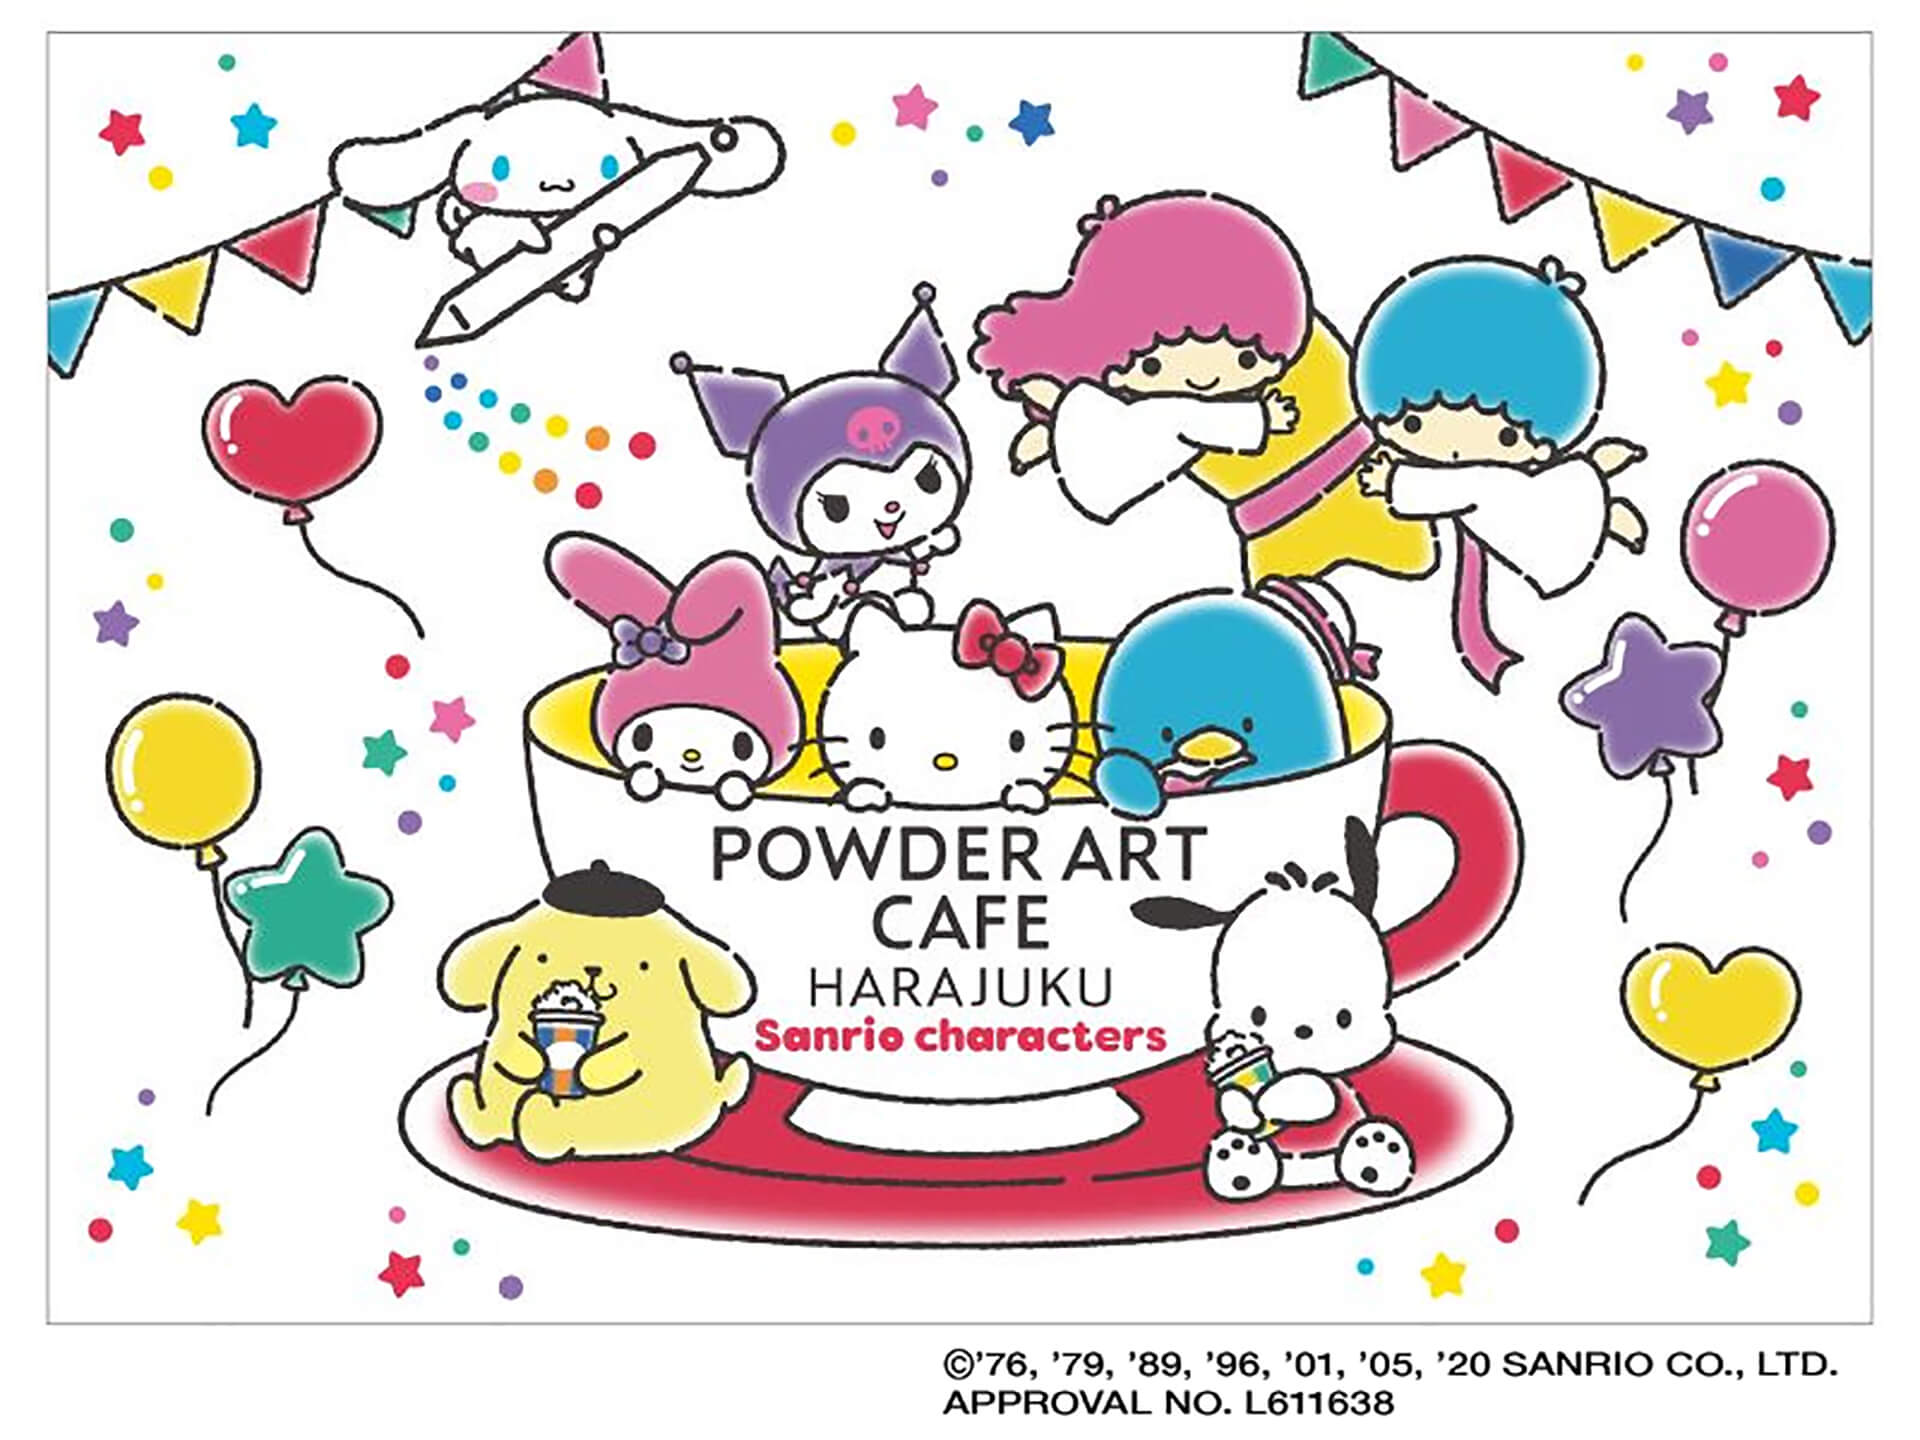 Powder Art Cafe Harajuku サンリオキャラクターコラボカフェ 関東のお出かけ情報ならオソトイコ